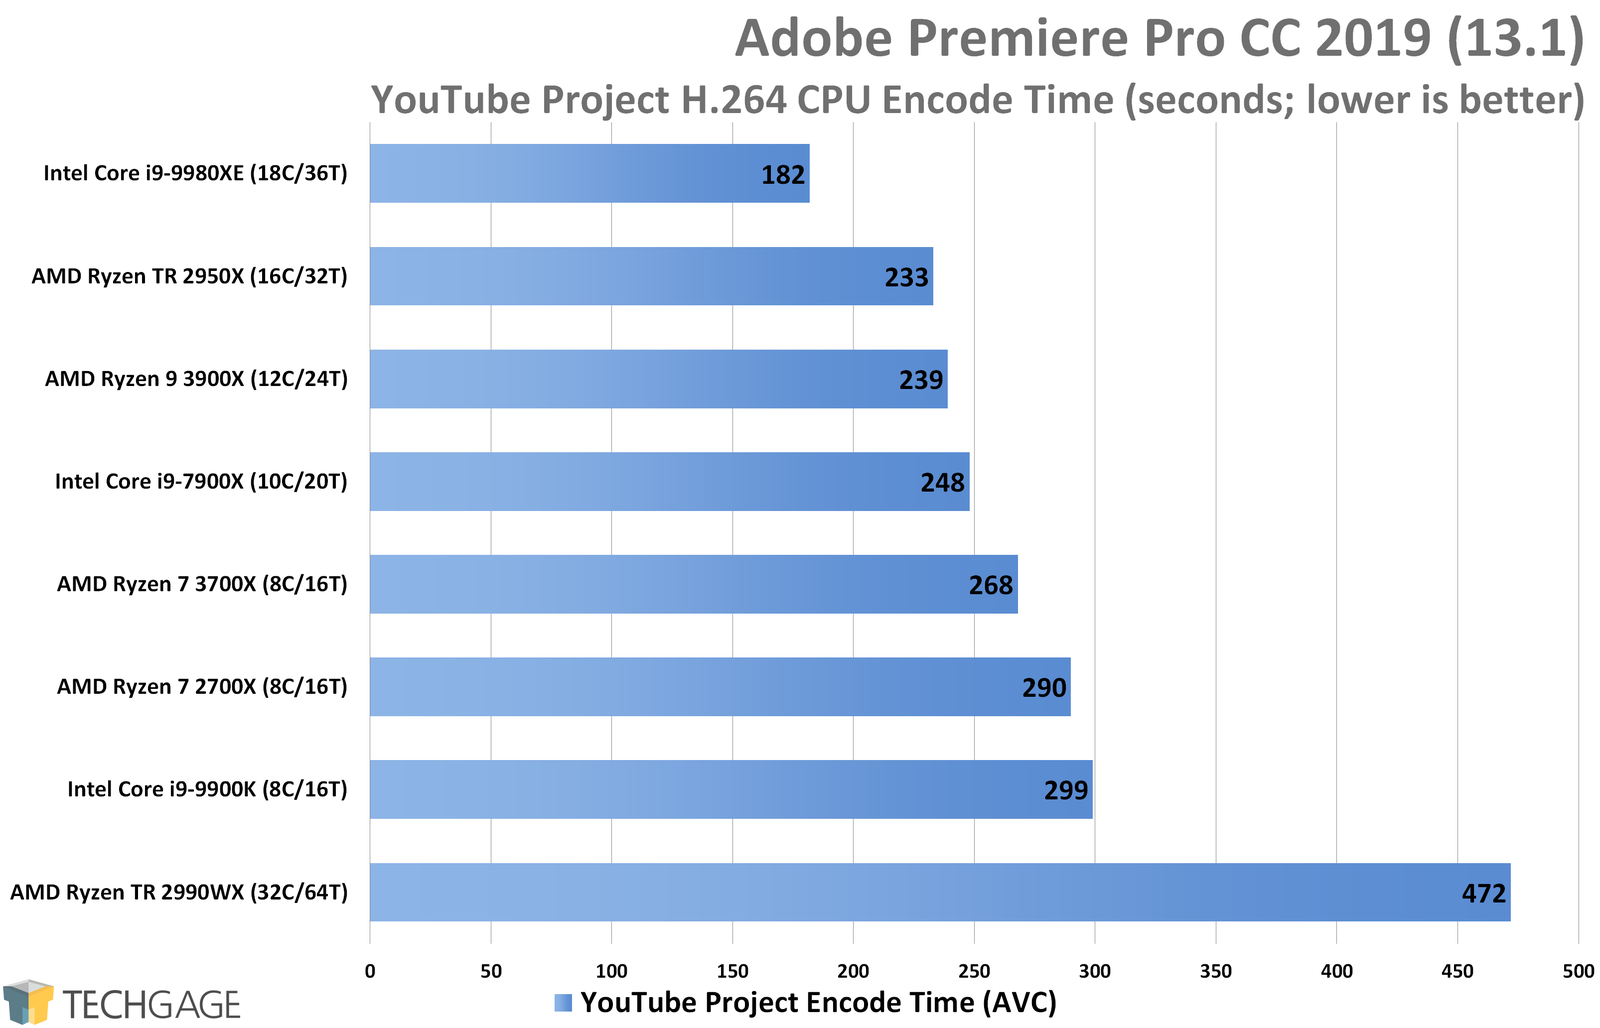 Adobe Premiere Pro CC 2019 Performance (YouTube Project AVC CPU Encode, AMD Ryzen 9 3900X and 7 3700X)